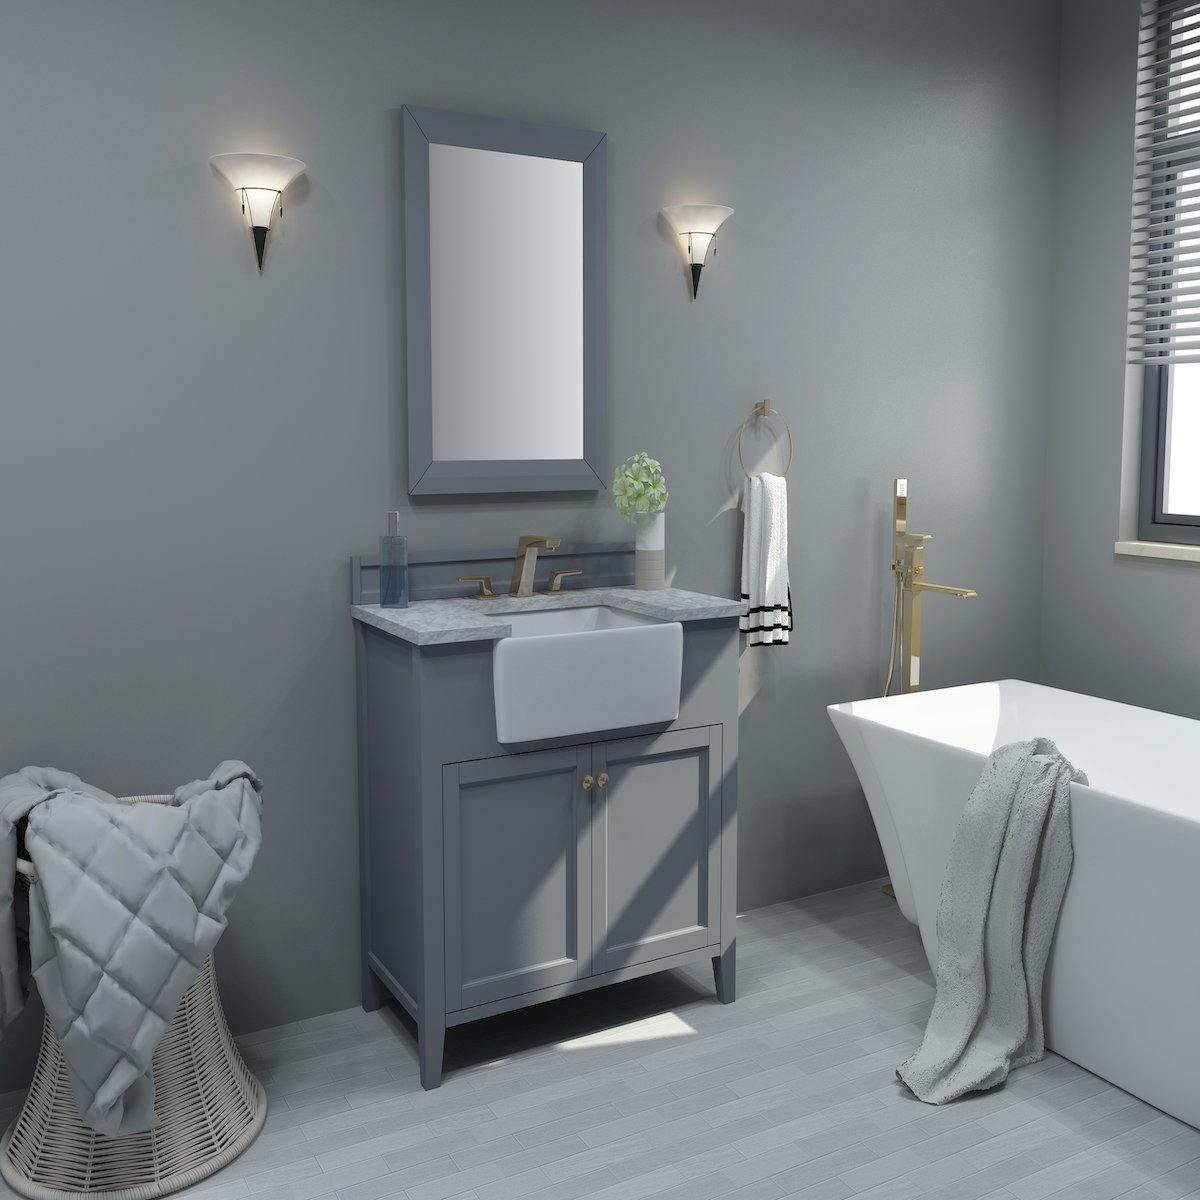 Ancerre Designs Adeline 36 Inch Sapphire Gray Single Vanity in Bathroom